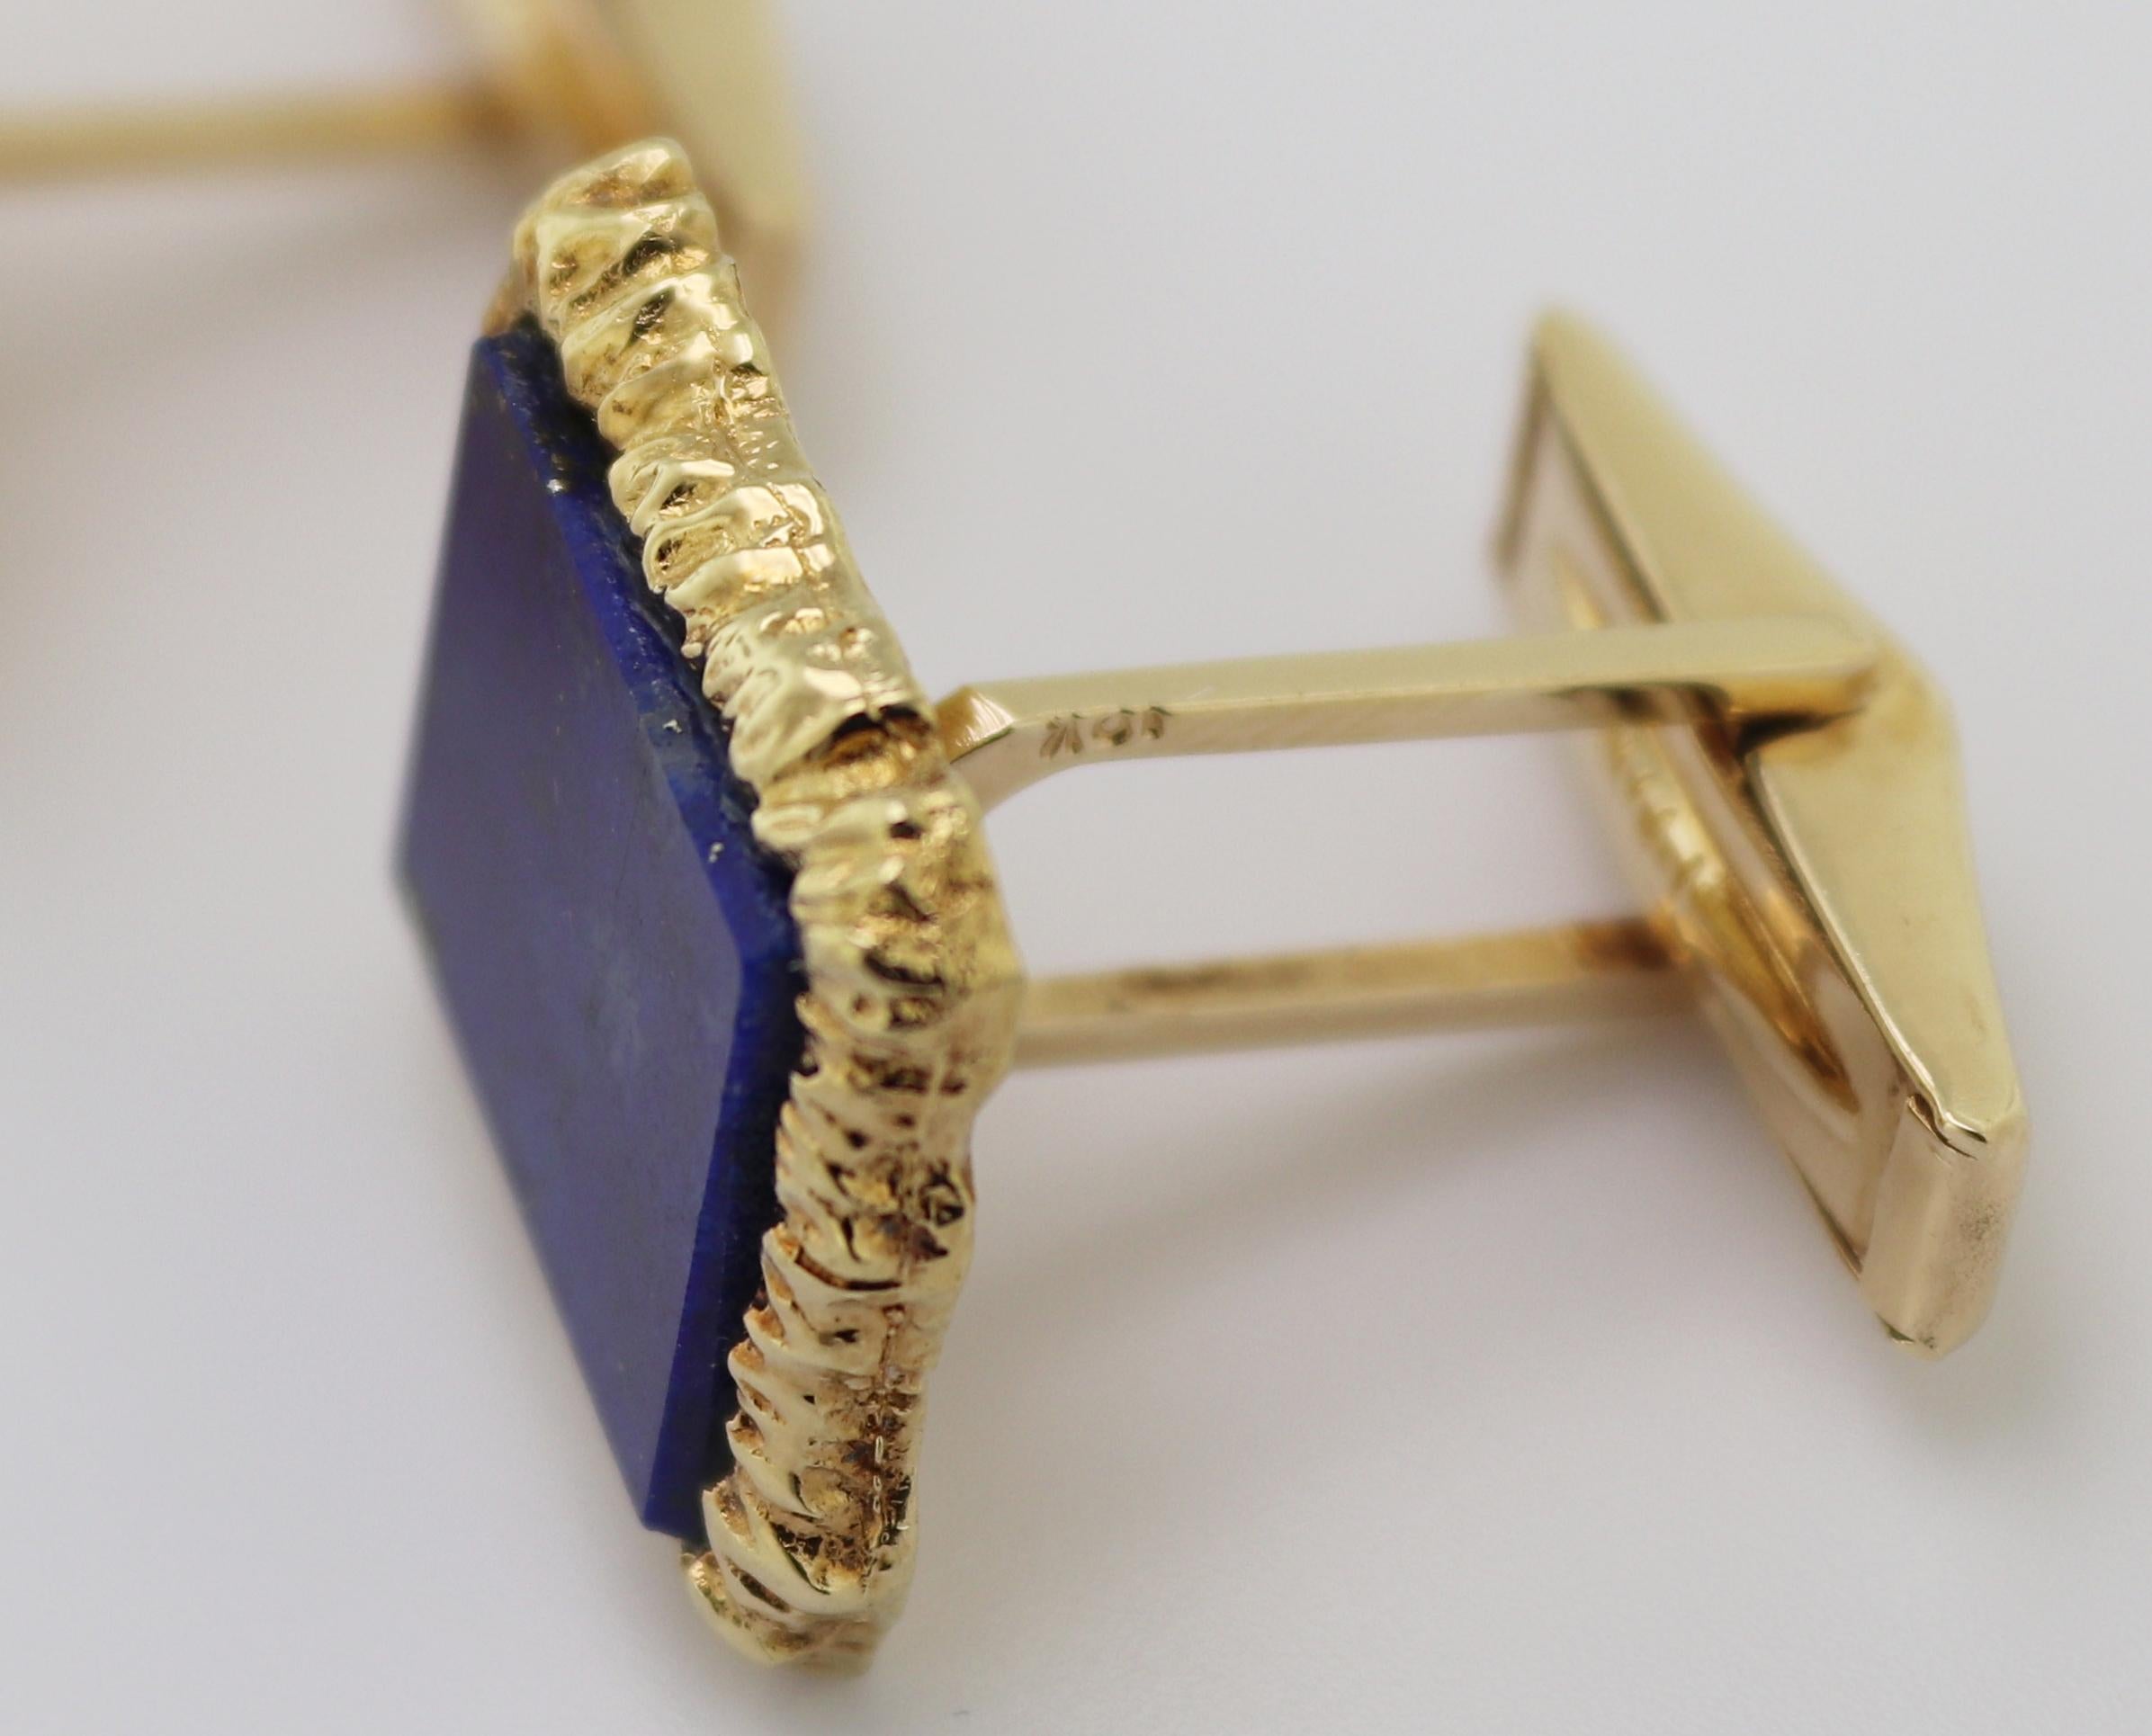 Each featuring (1) rectangular lapis Lazuli tablet, 14 X 12 X 1.6 mm, set in
an irregular textured, 14k yellow gold rectangular frame mounting, 18.7 X
16.4 3.2 mm, completed by 14k yellow gold swivel backs, marked 14K,
Gross Weight 15.22 grams.